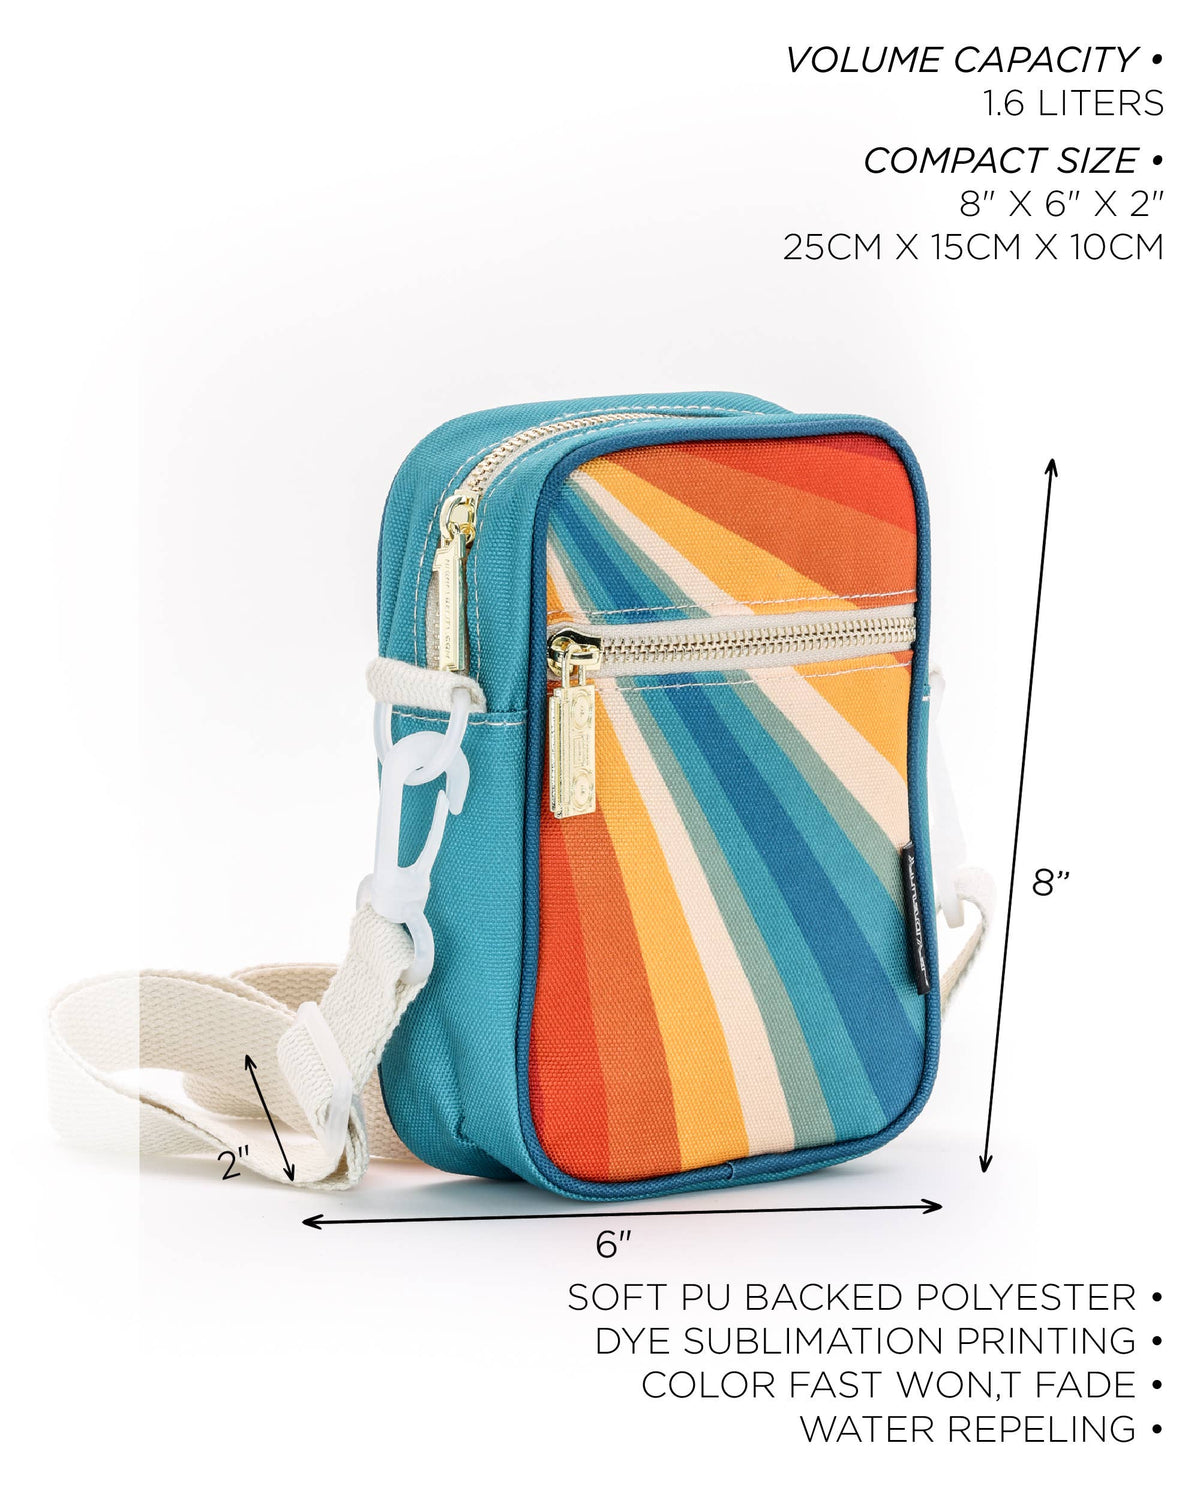 Crossbody Mini Brick Bag (Recycled Rainbow)